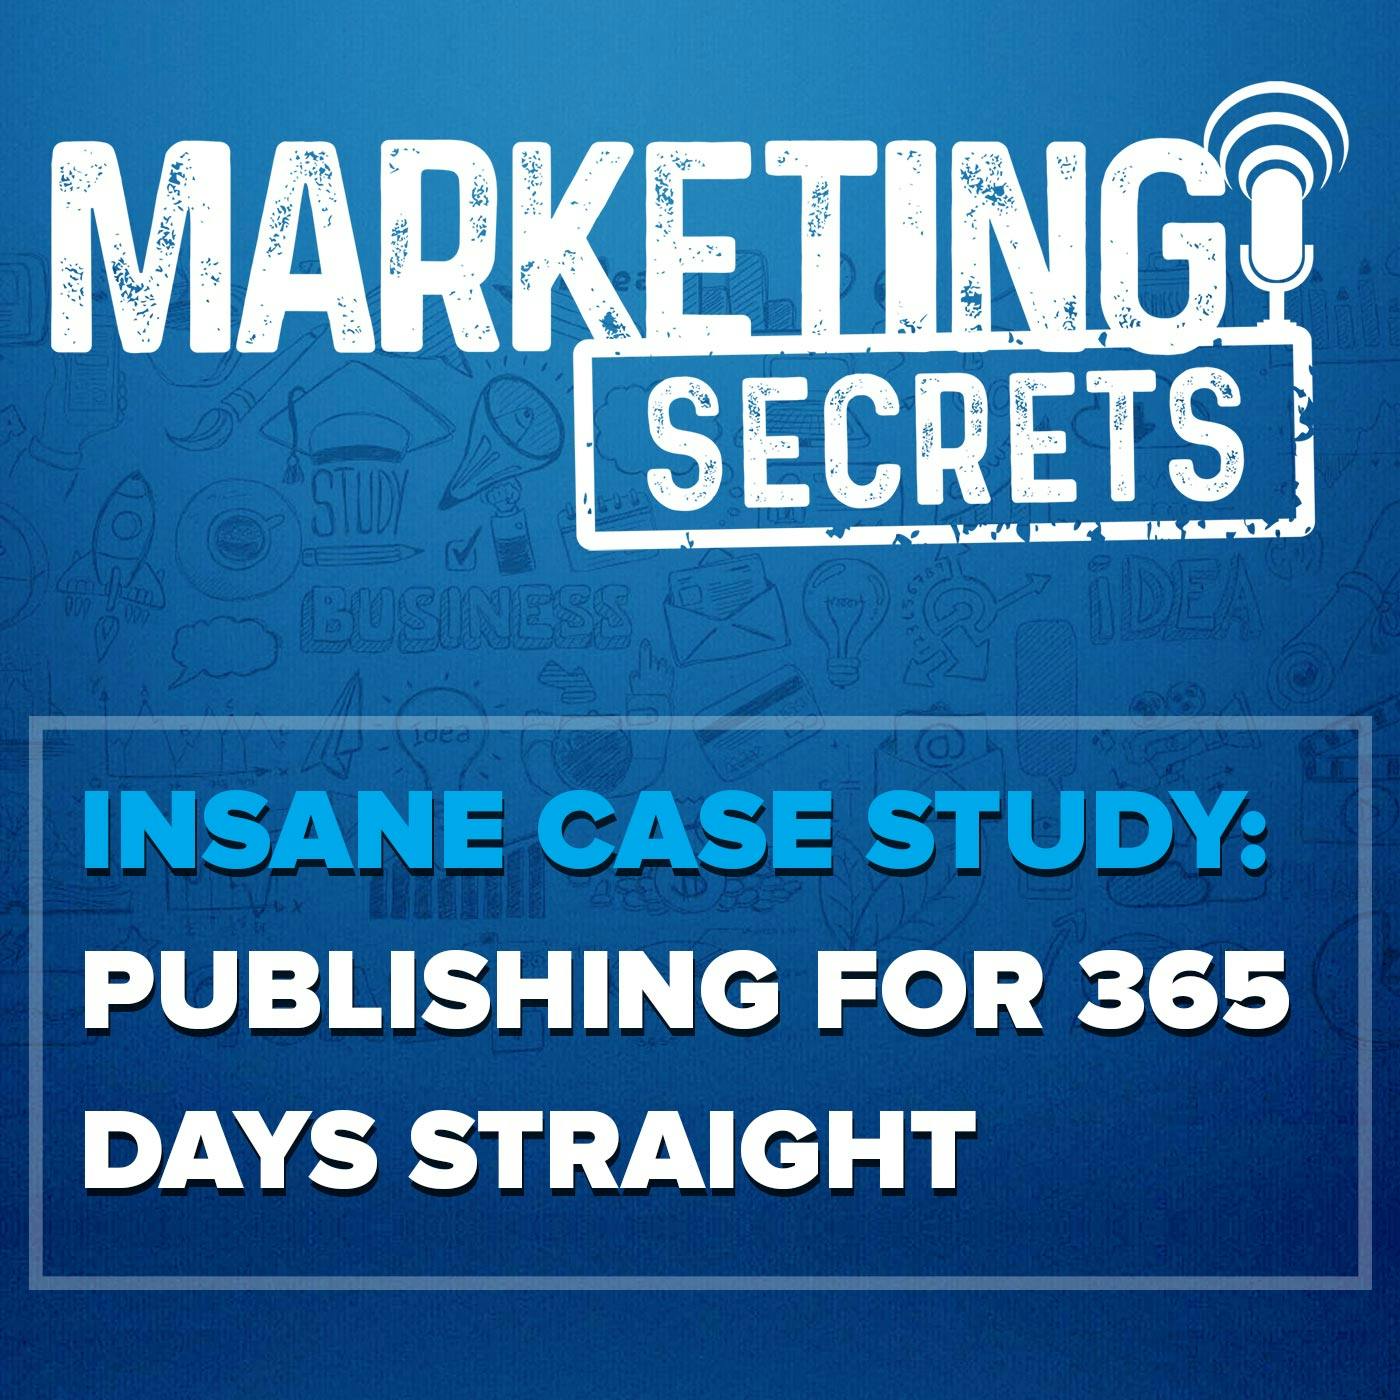 INSANE CASE STUDY: Publishing For 365 Days Straight